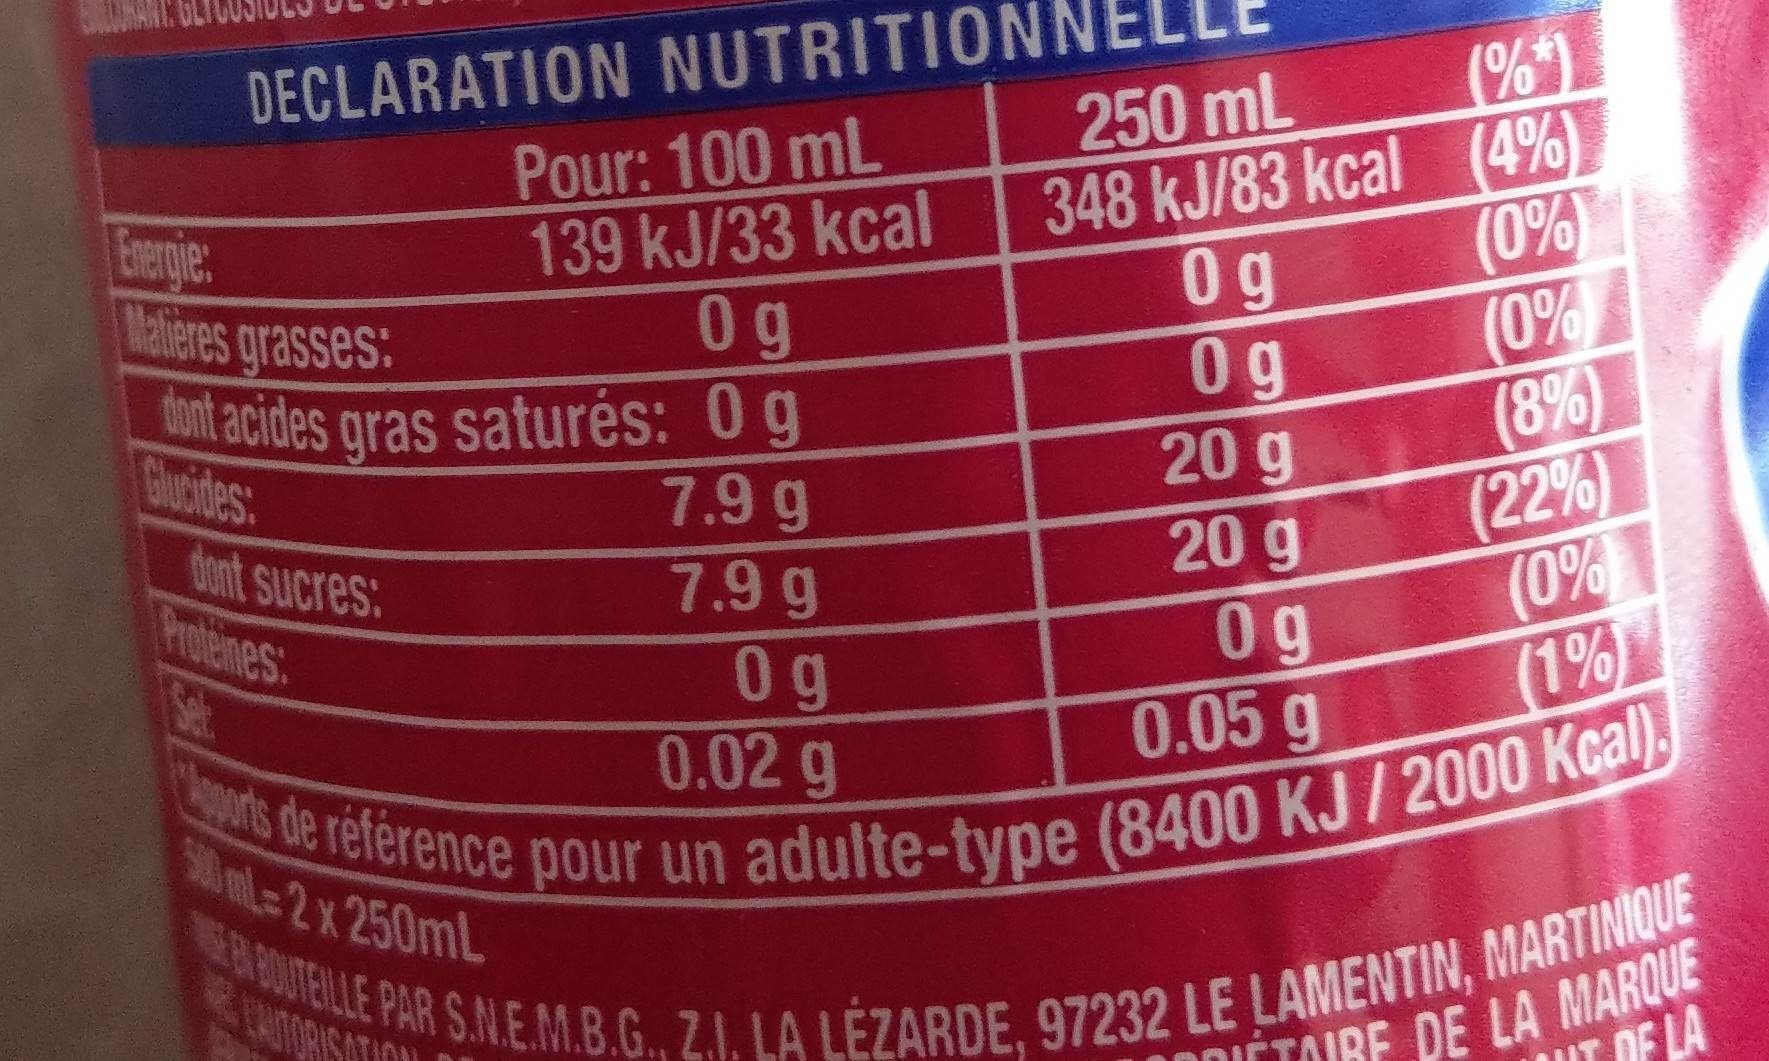 Fanta manzana - Nutrition facts - fr